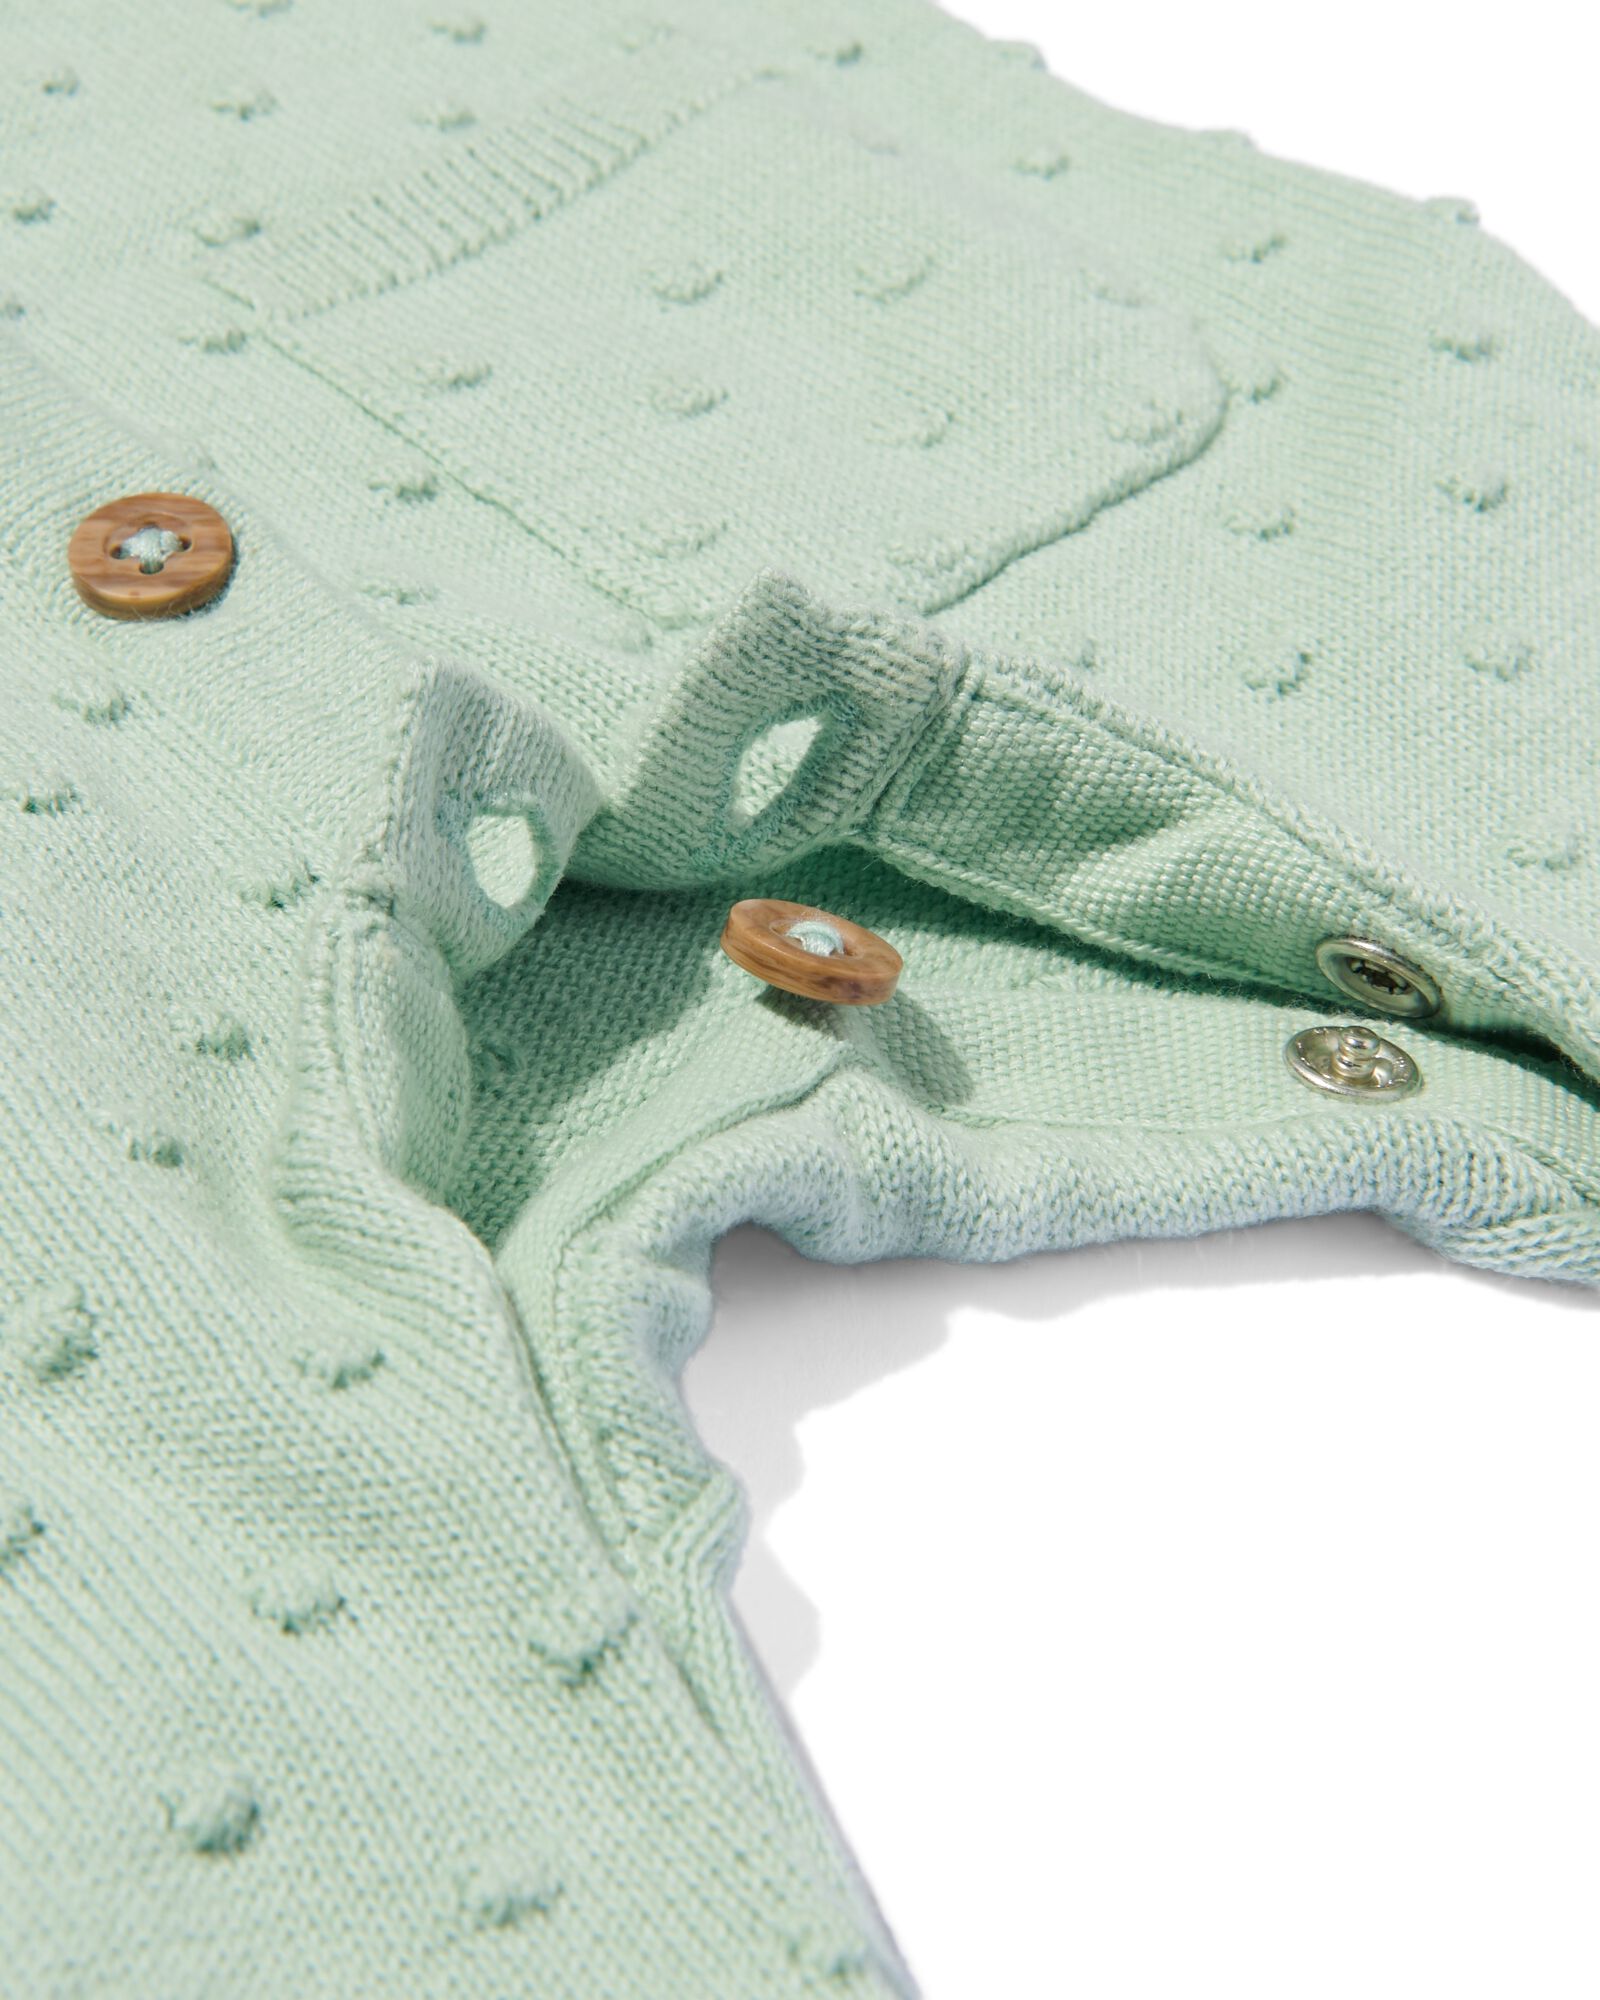 newborn jumpsuit gebreid groen groen - 33482310GREEN - HEMA